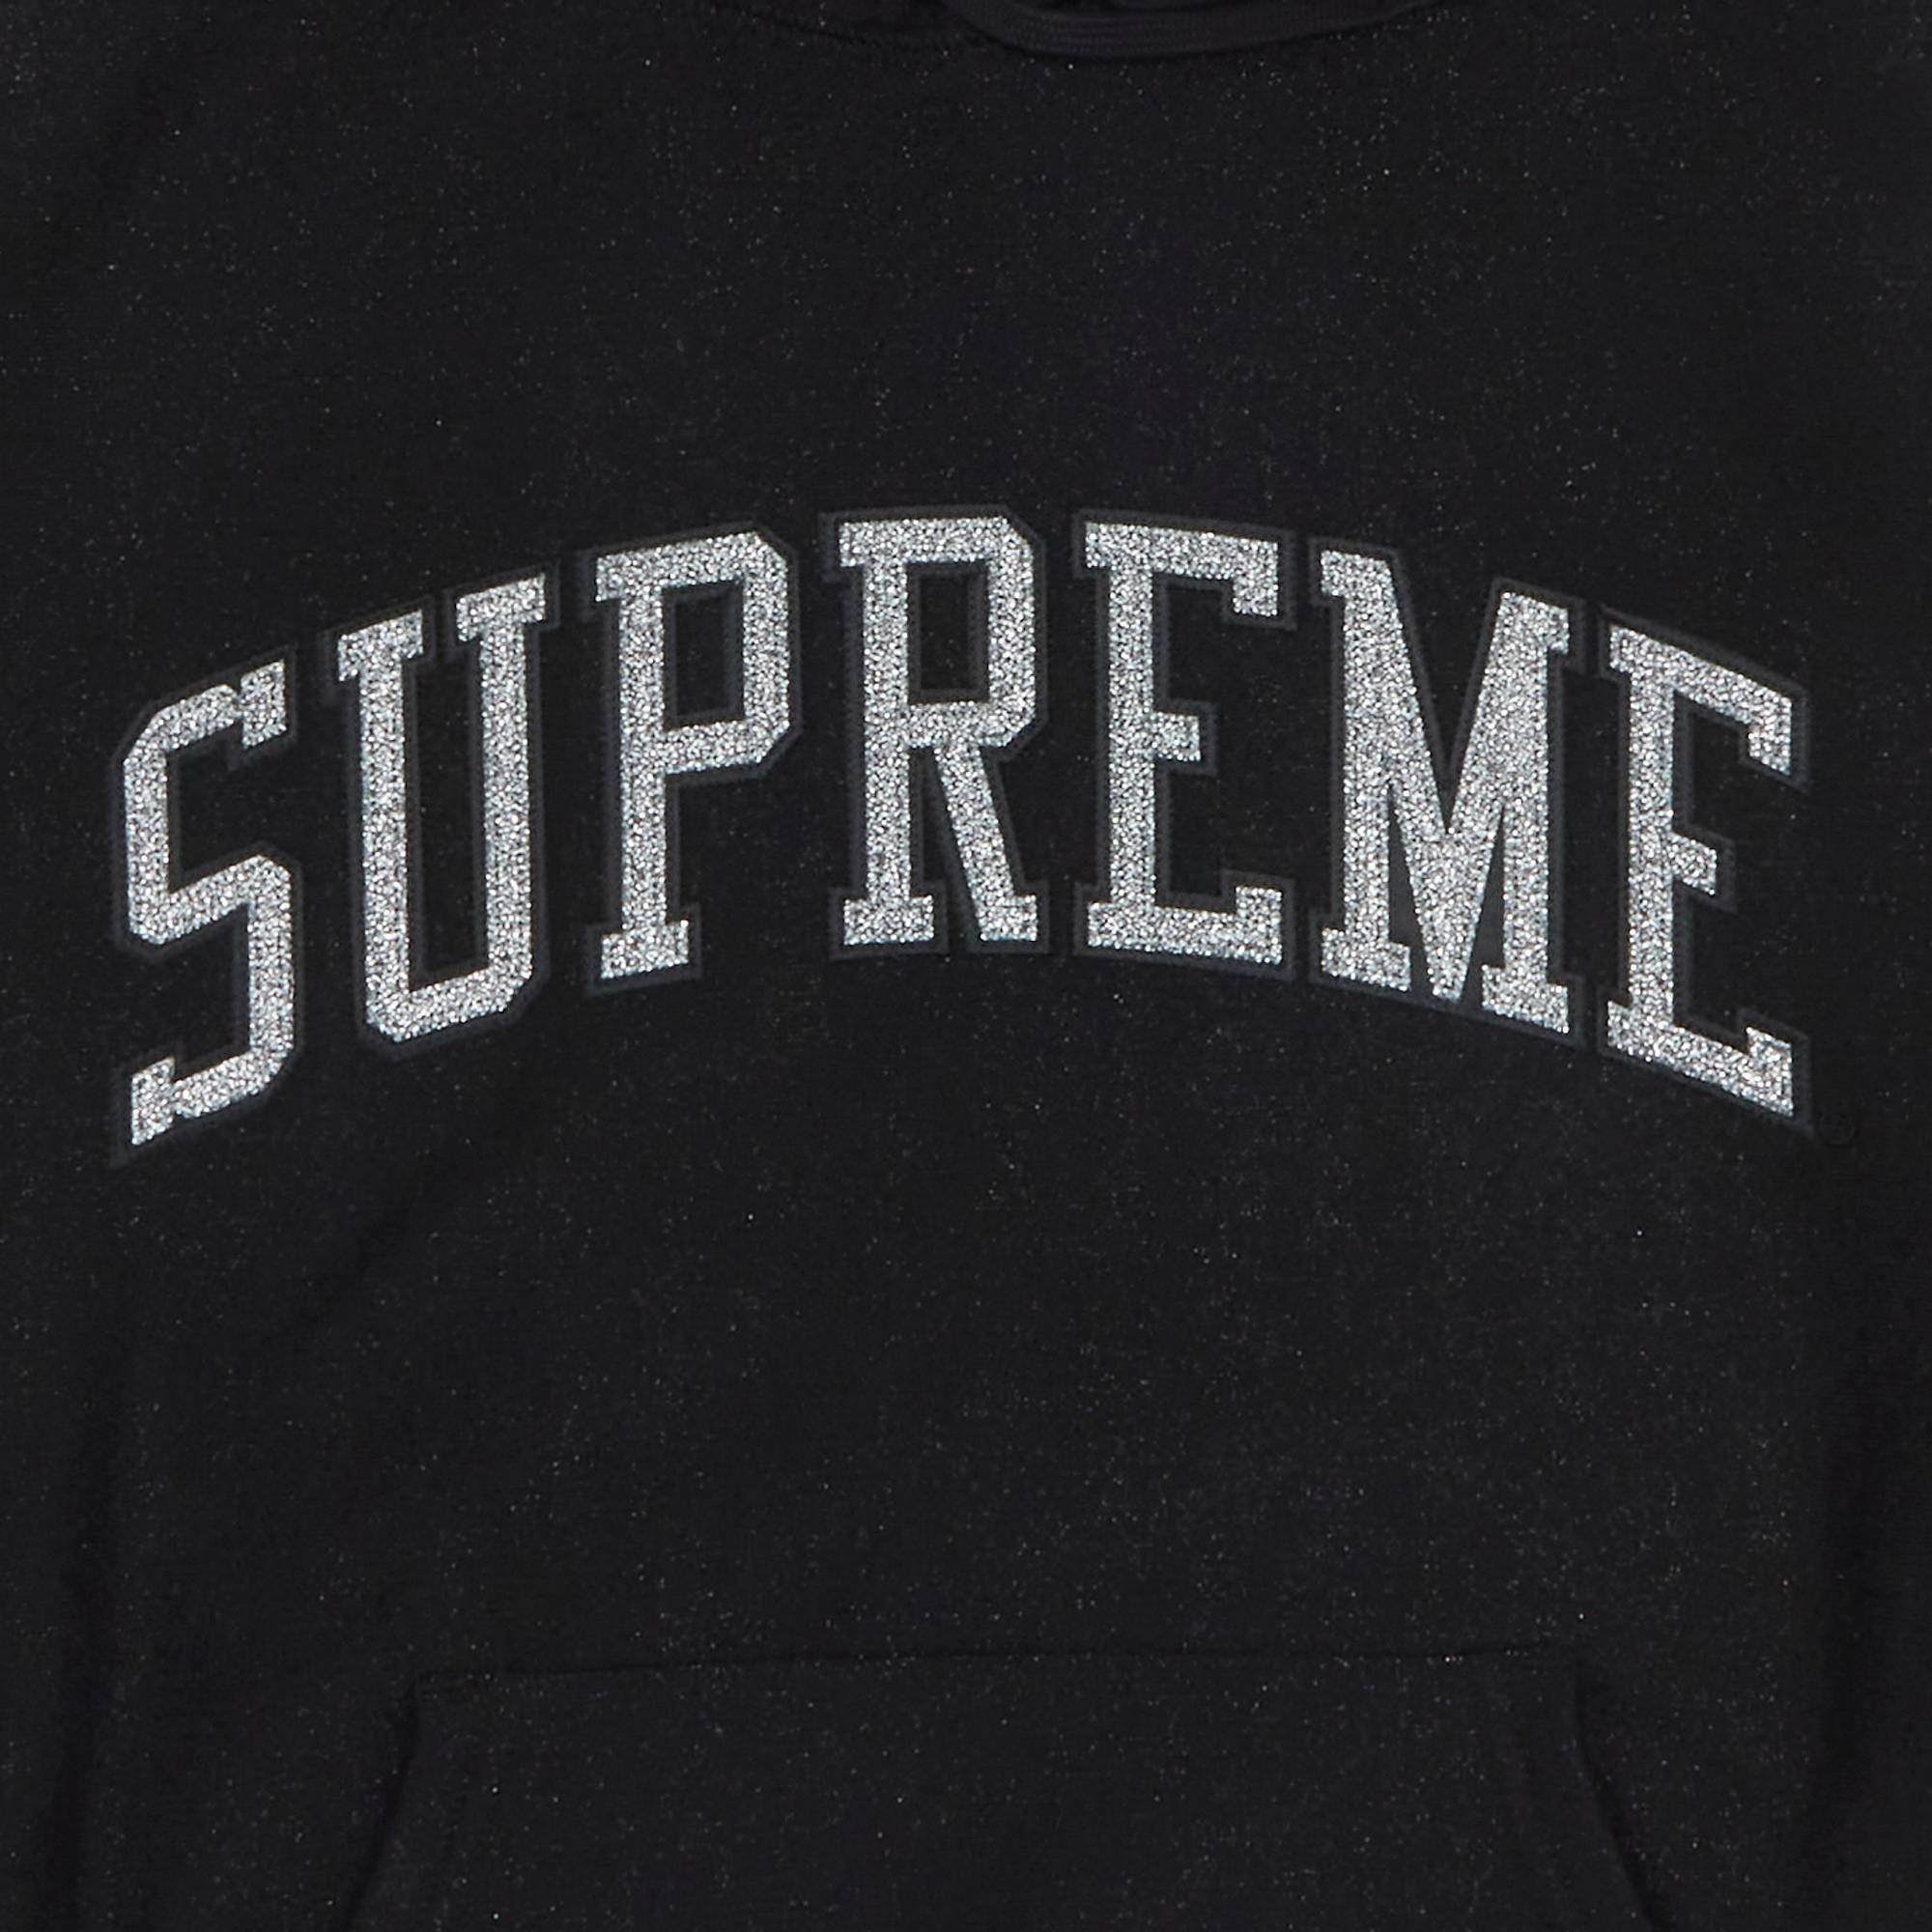 Supreme Glitter Arc Hooded Sweatshirt 'Black'